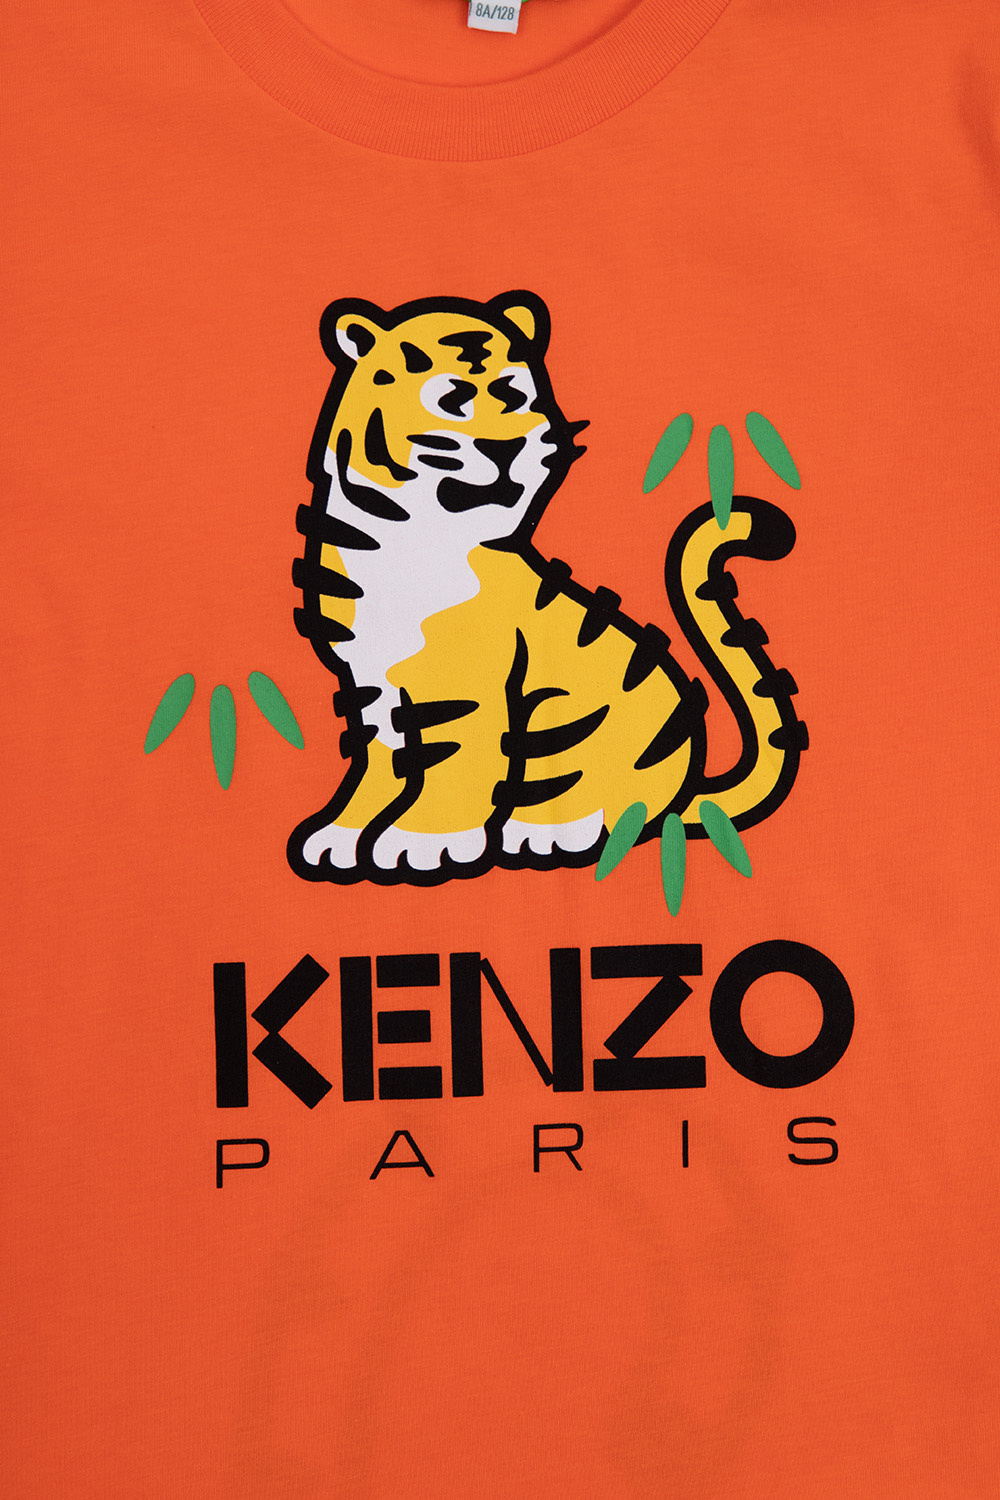 Kenzo orange Cotton Bandana Print T-Shirt